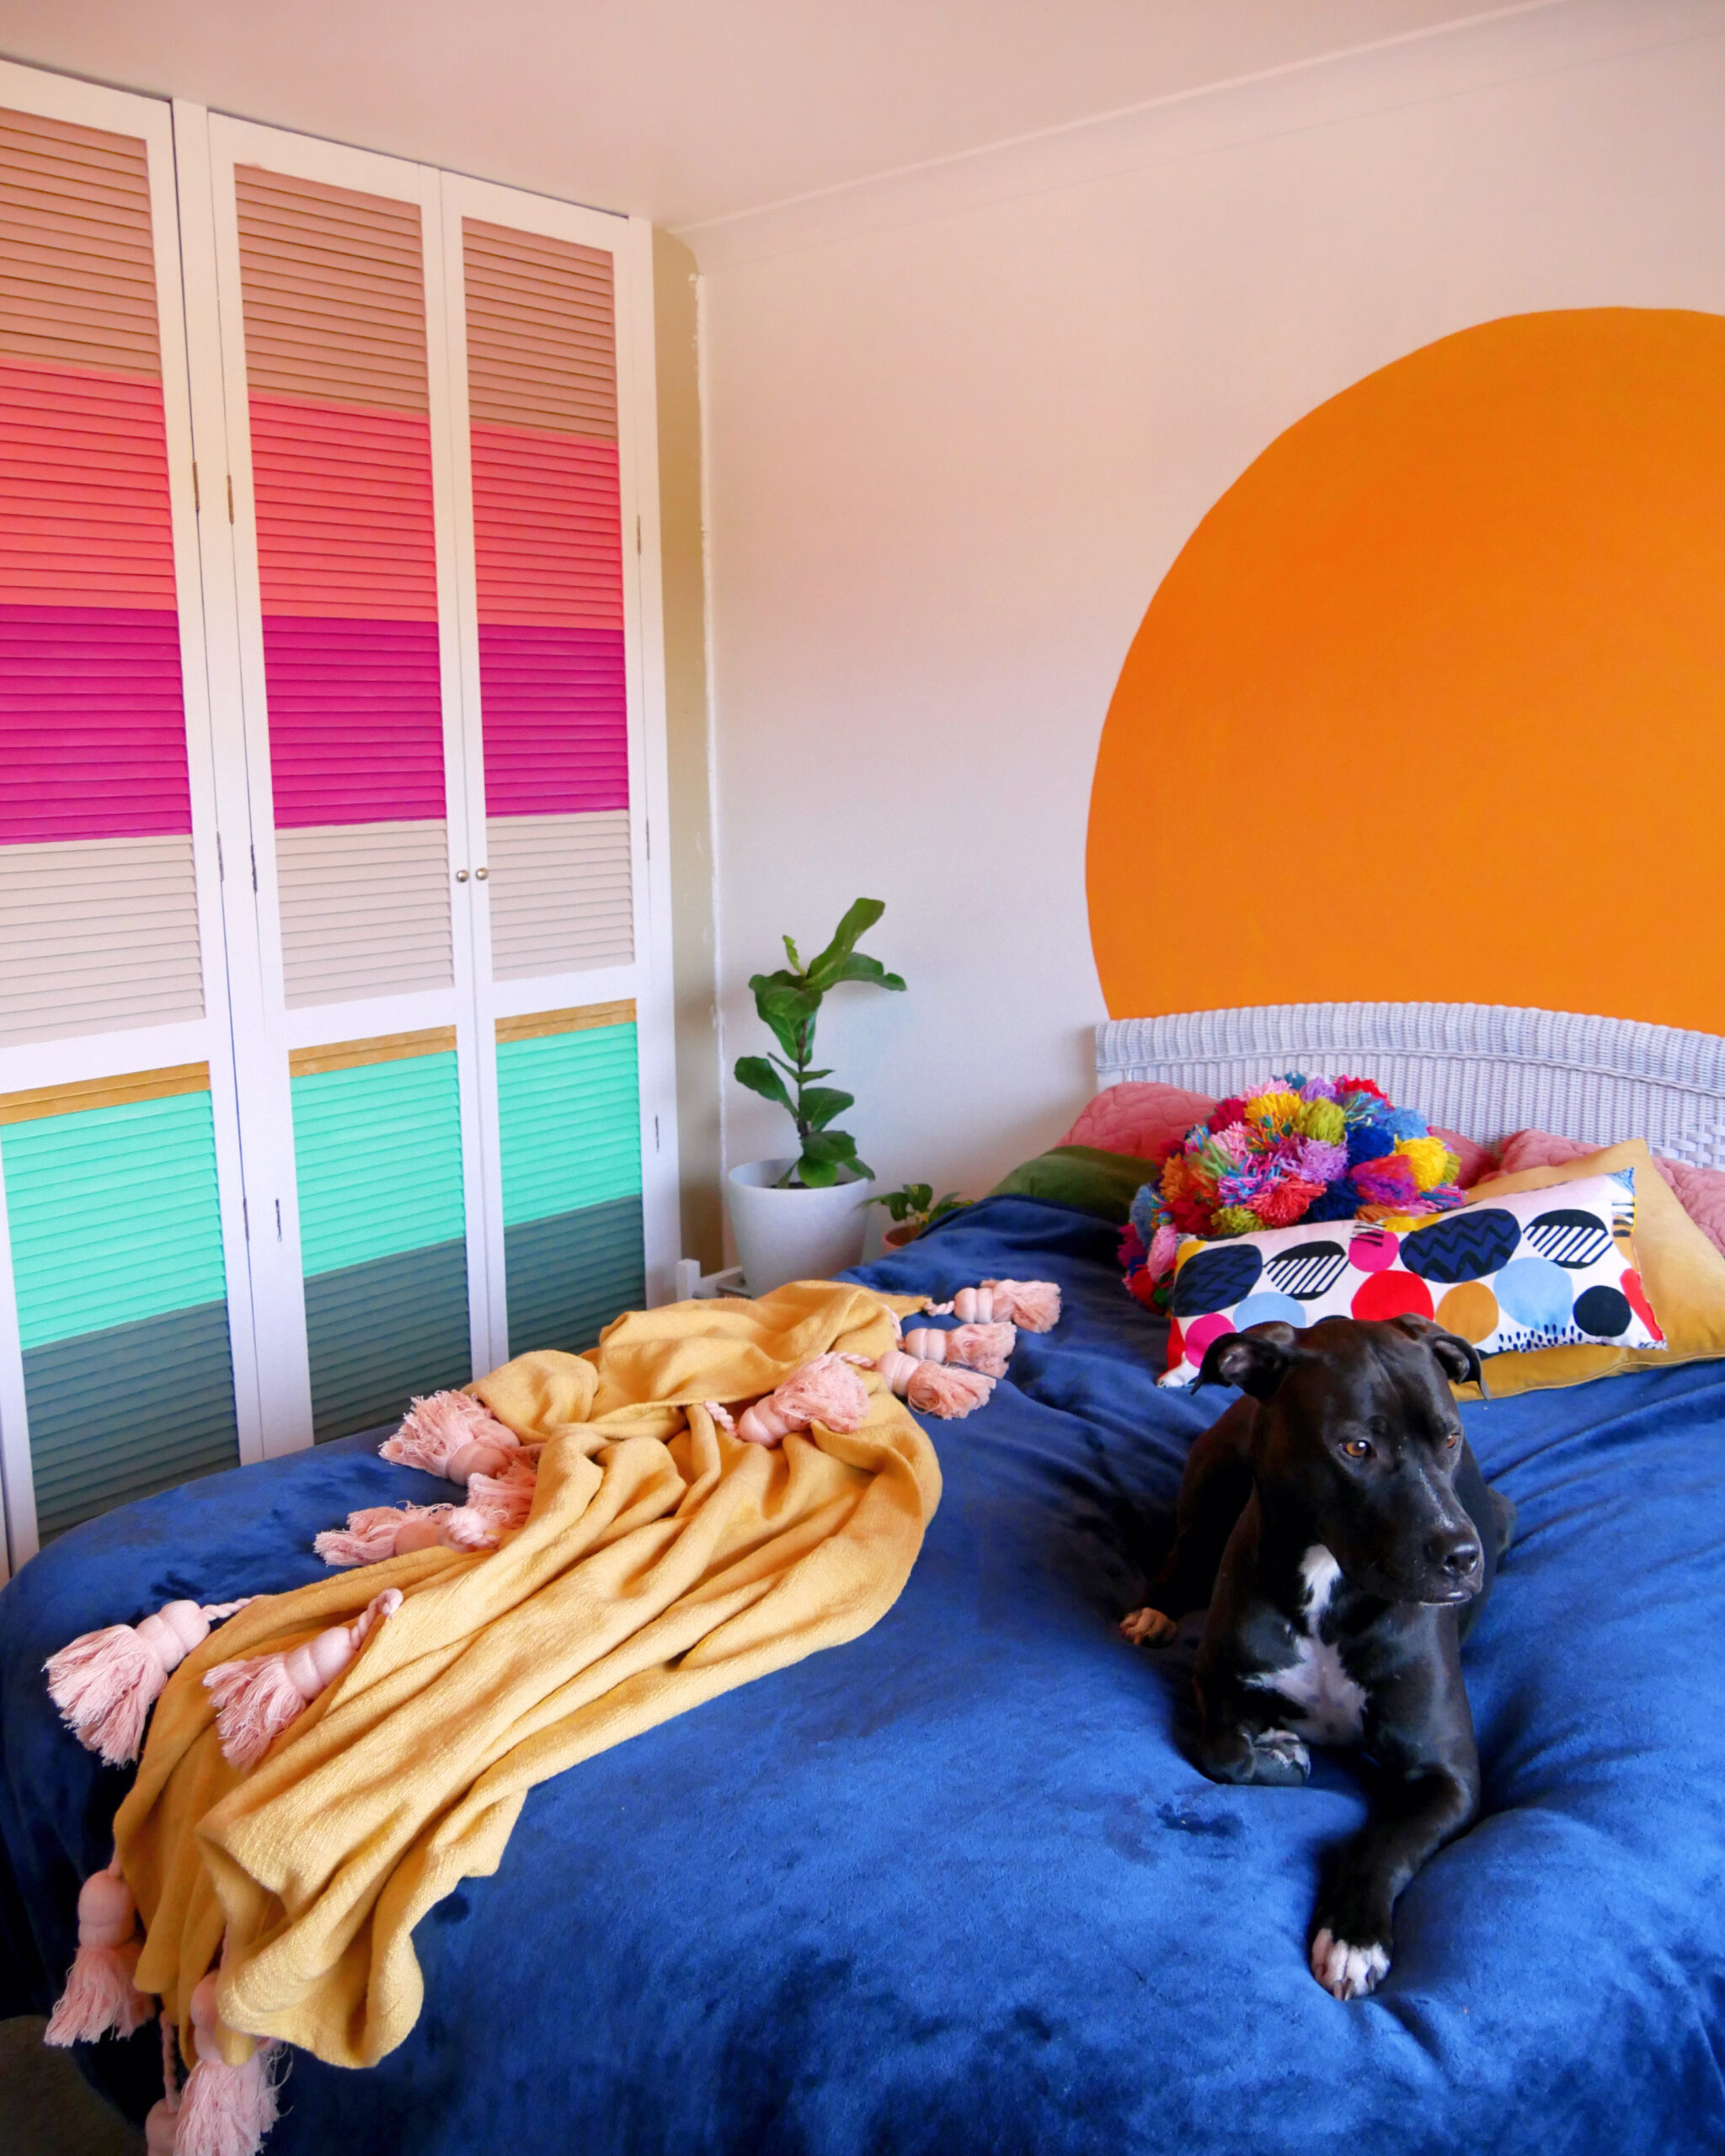 DIY Colourful Wardrobe: Home Renovation Diaries #5